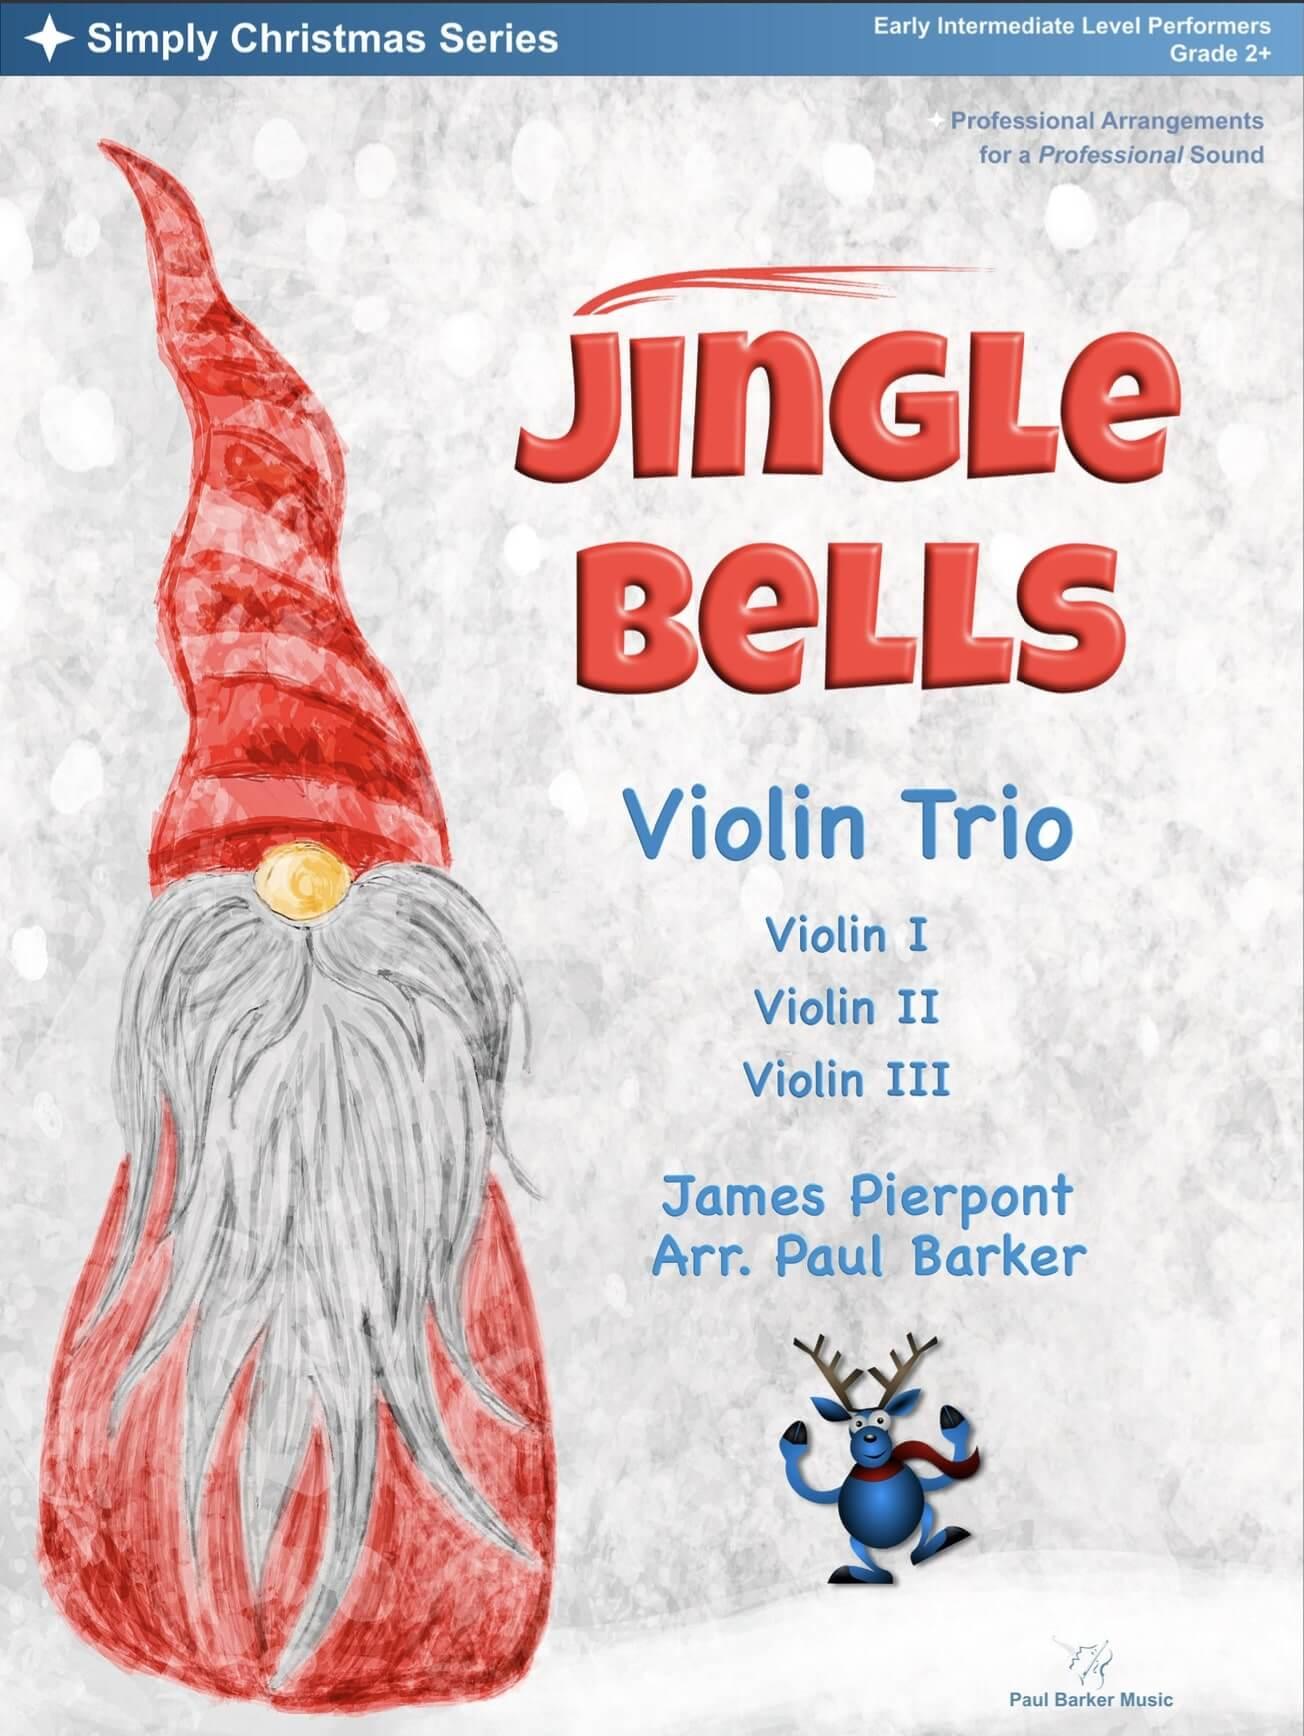 Jingle Bells (Violin Trio) - Paul Barker Music 